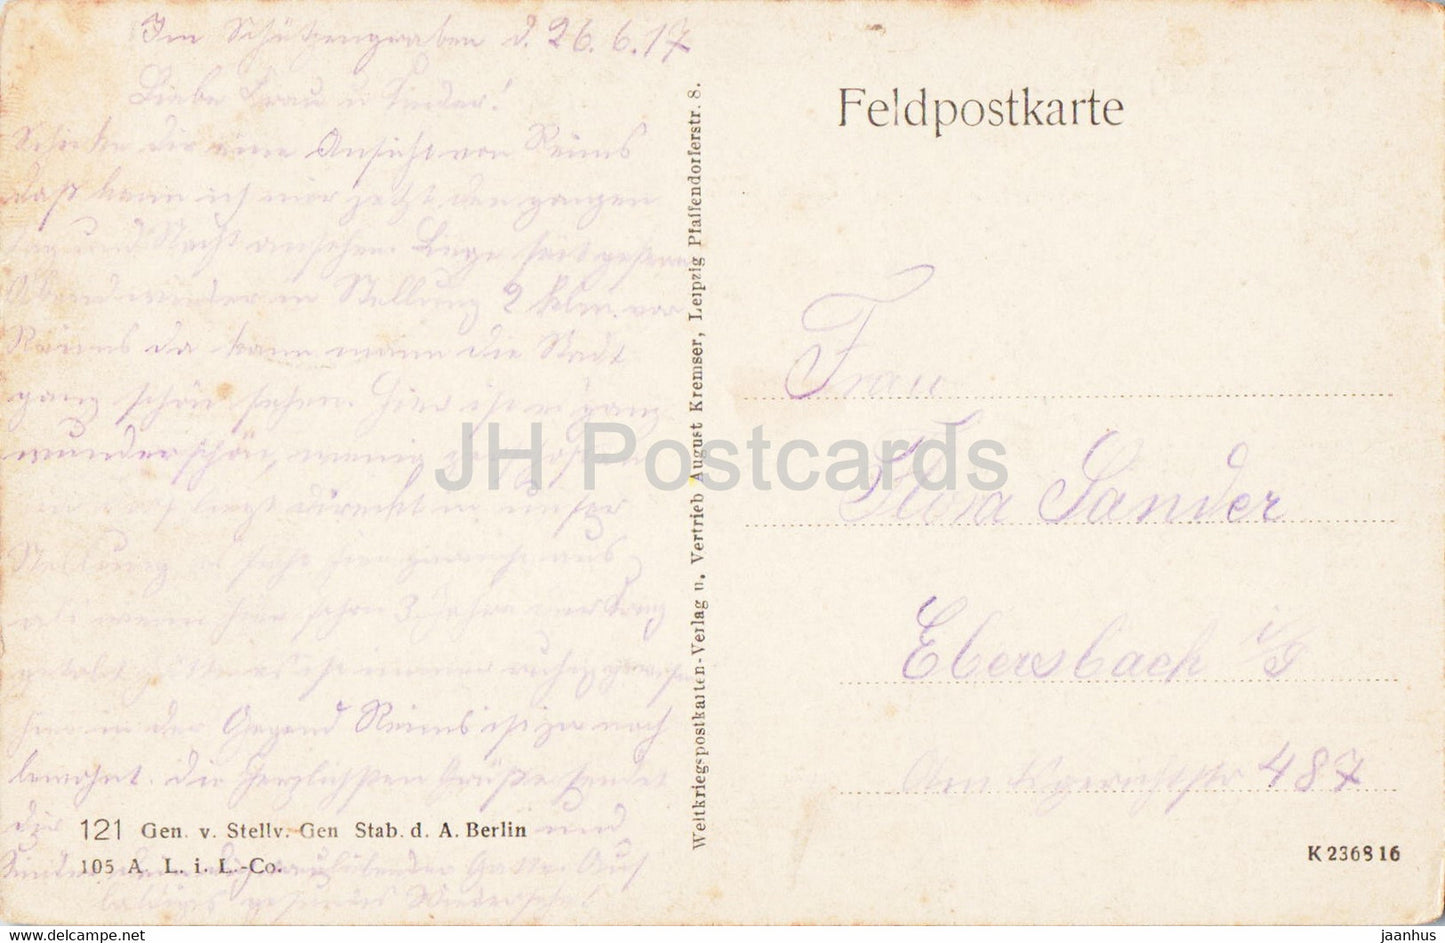 Reims - Frankreich - Feldpostkarte - 121 - old postcard - 1917 - France - used